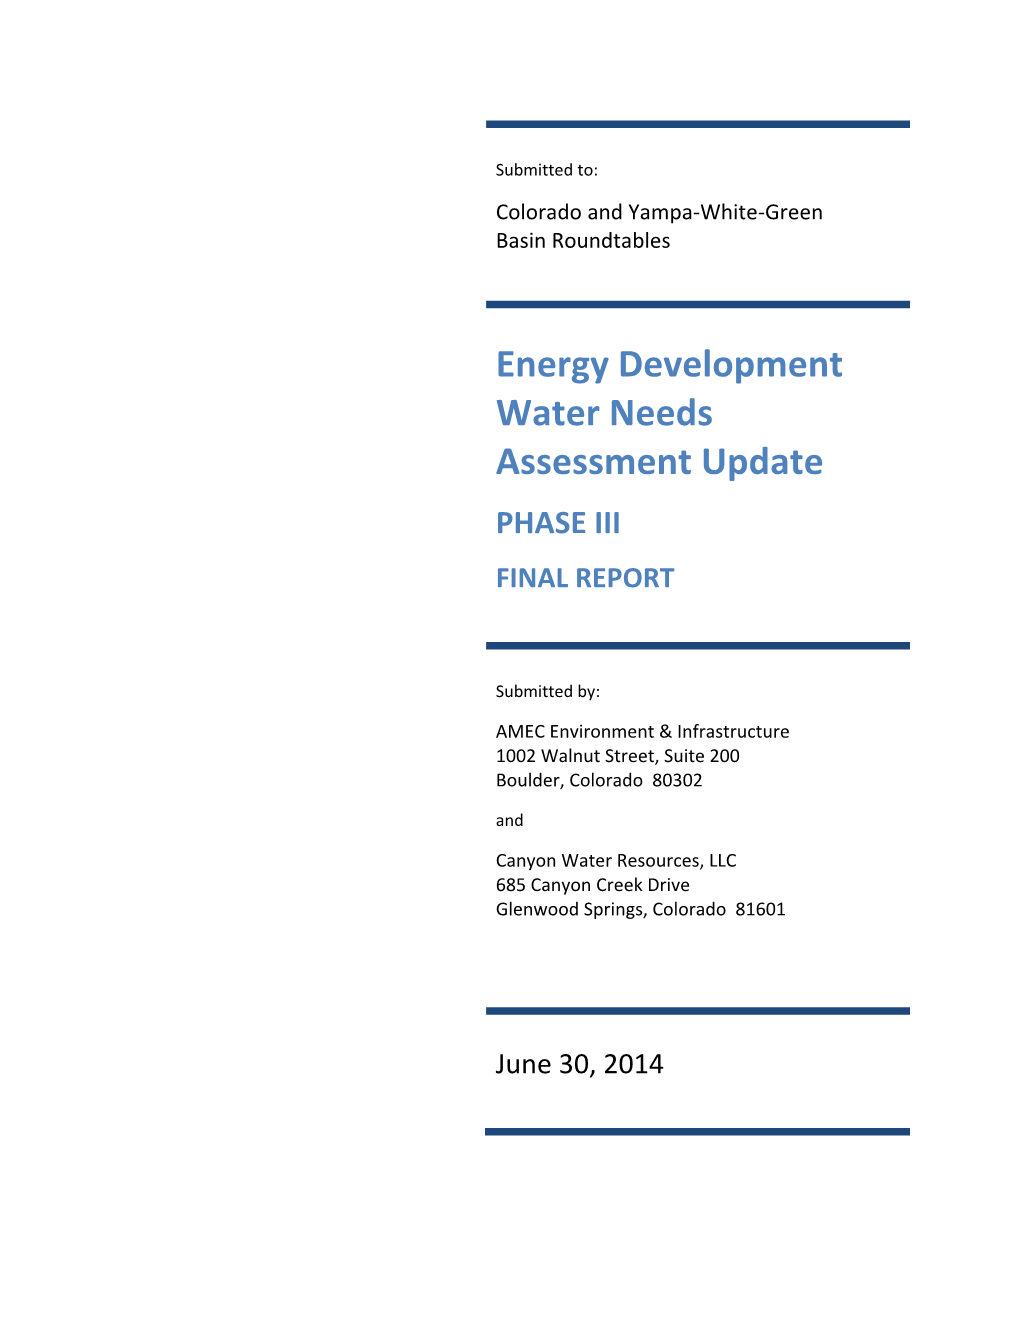 Energy Development Water Needs Assessment Update PHASE III FINAL REPORT